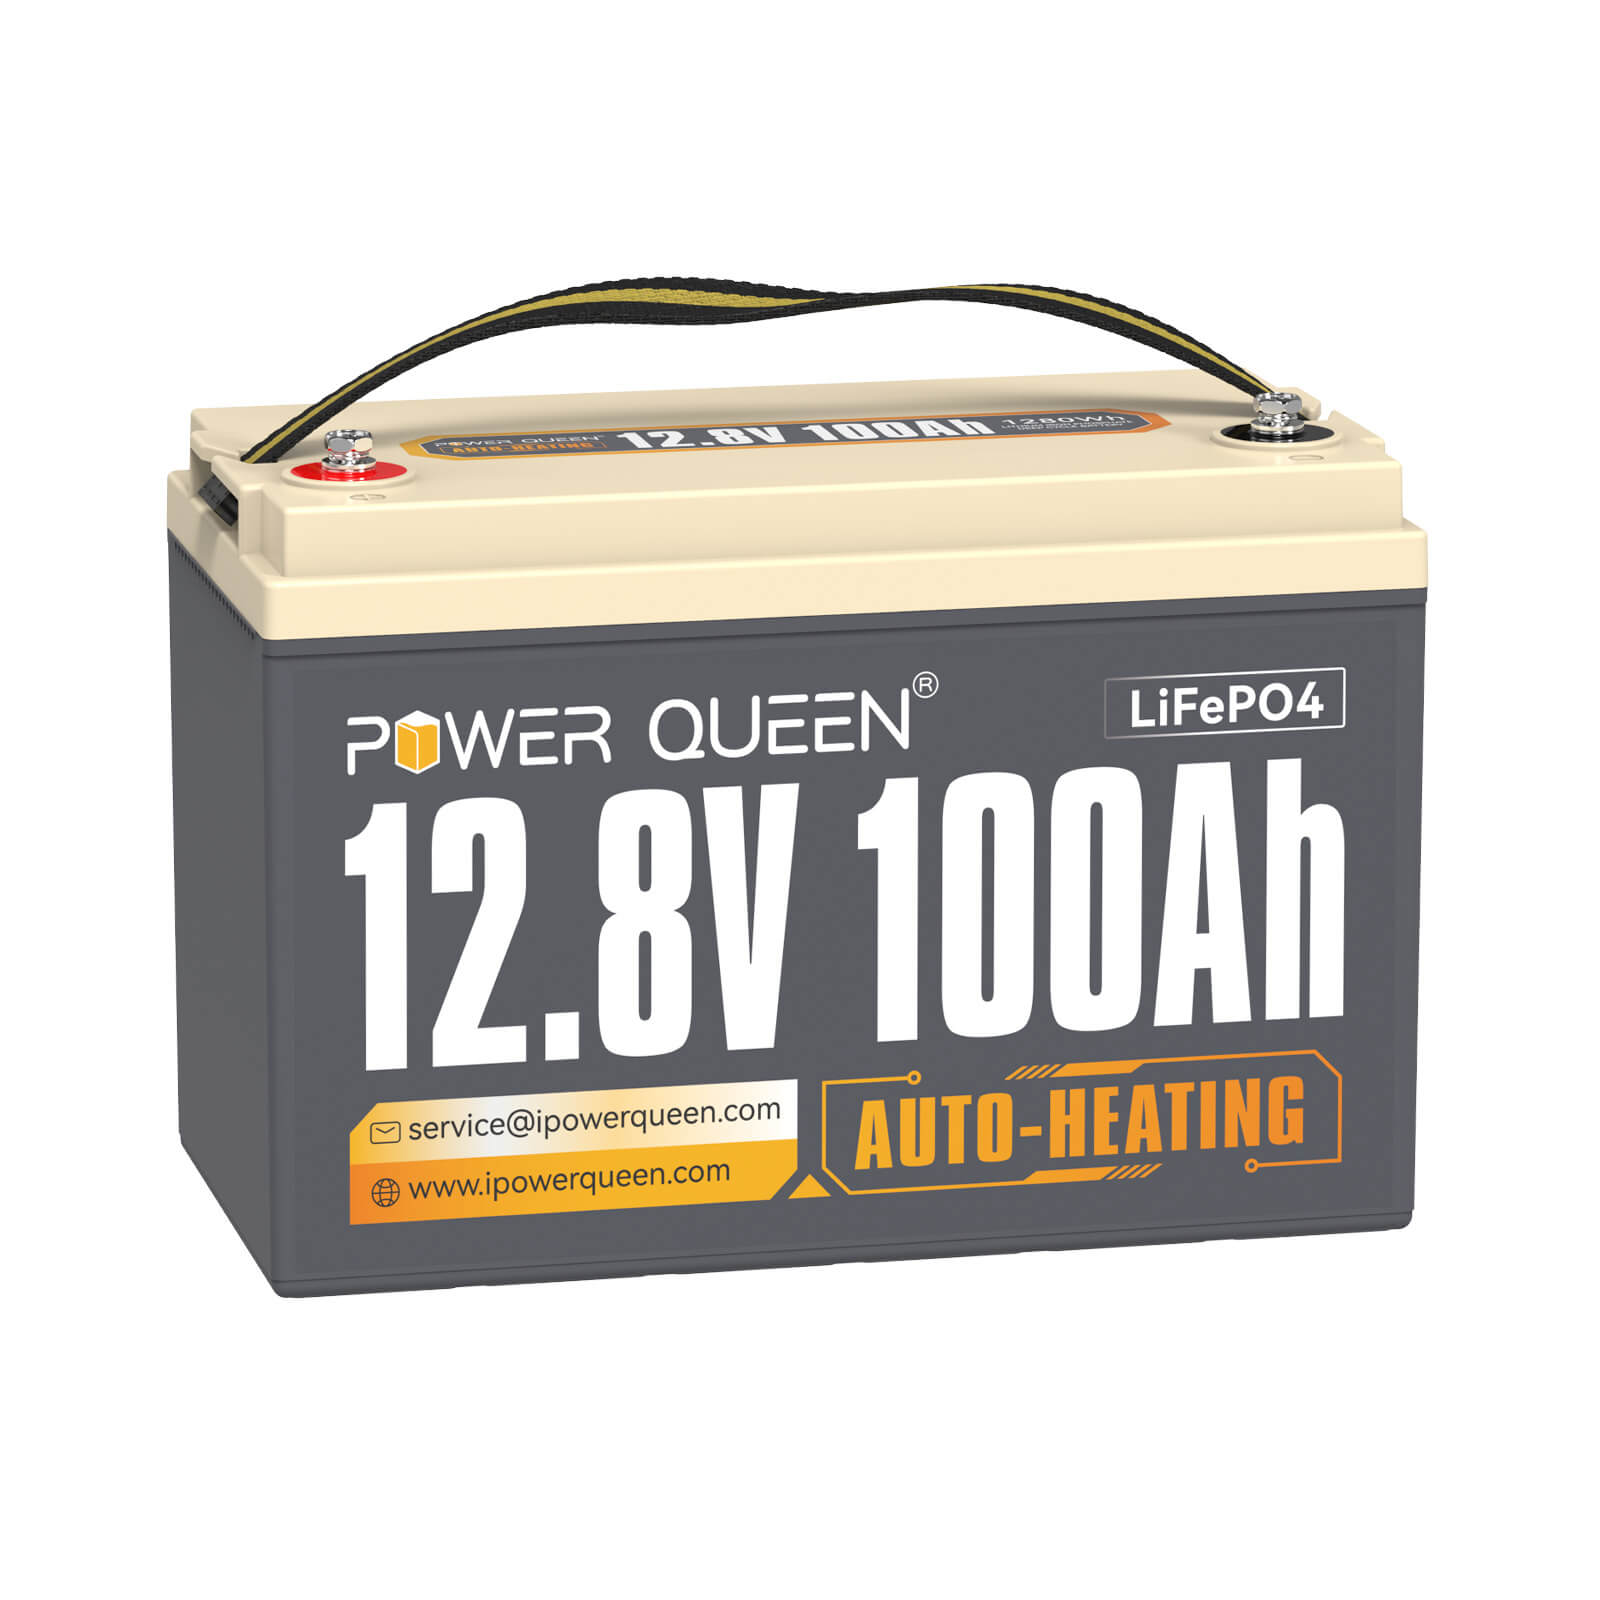 【Comme neuf】 Batterie LiFePO4 auto-chauffante Power Queen 12,8 V 100 Ah, BMS 100 A intégré